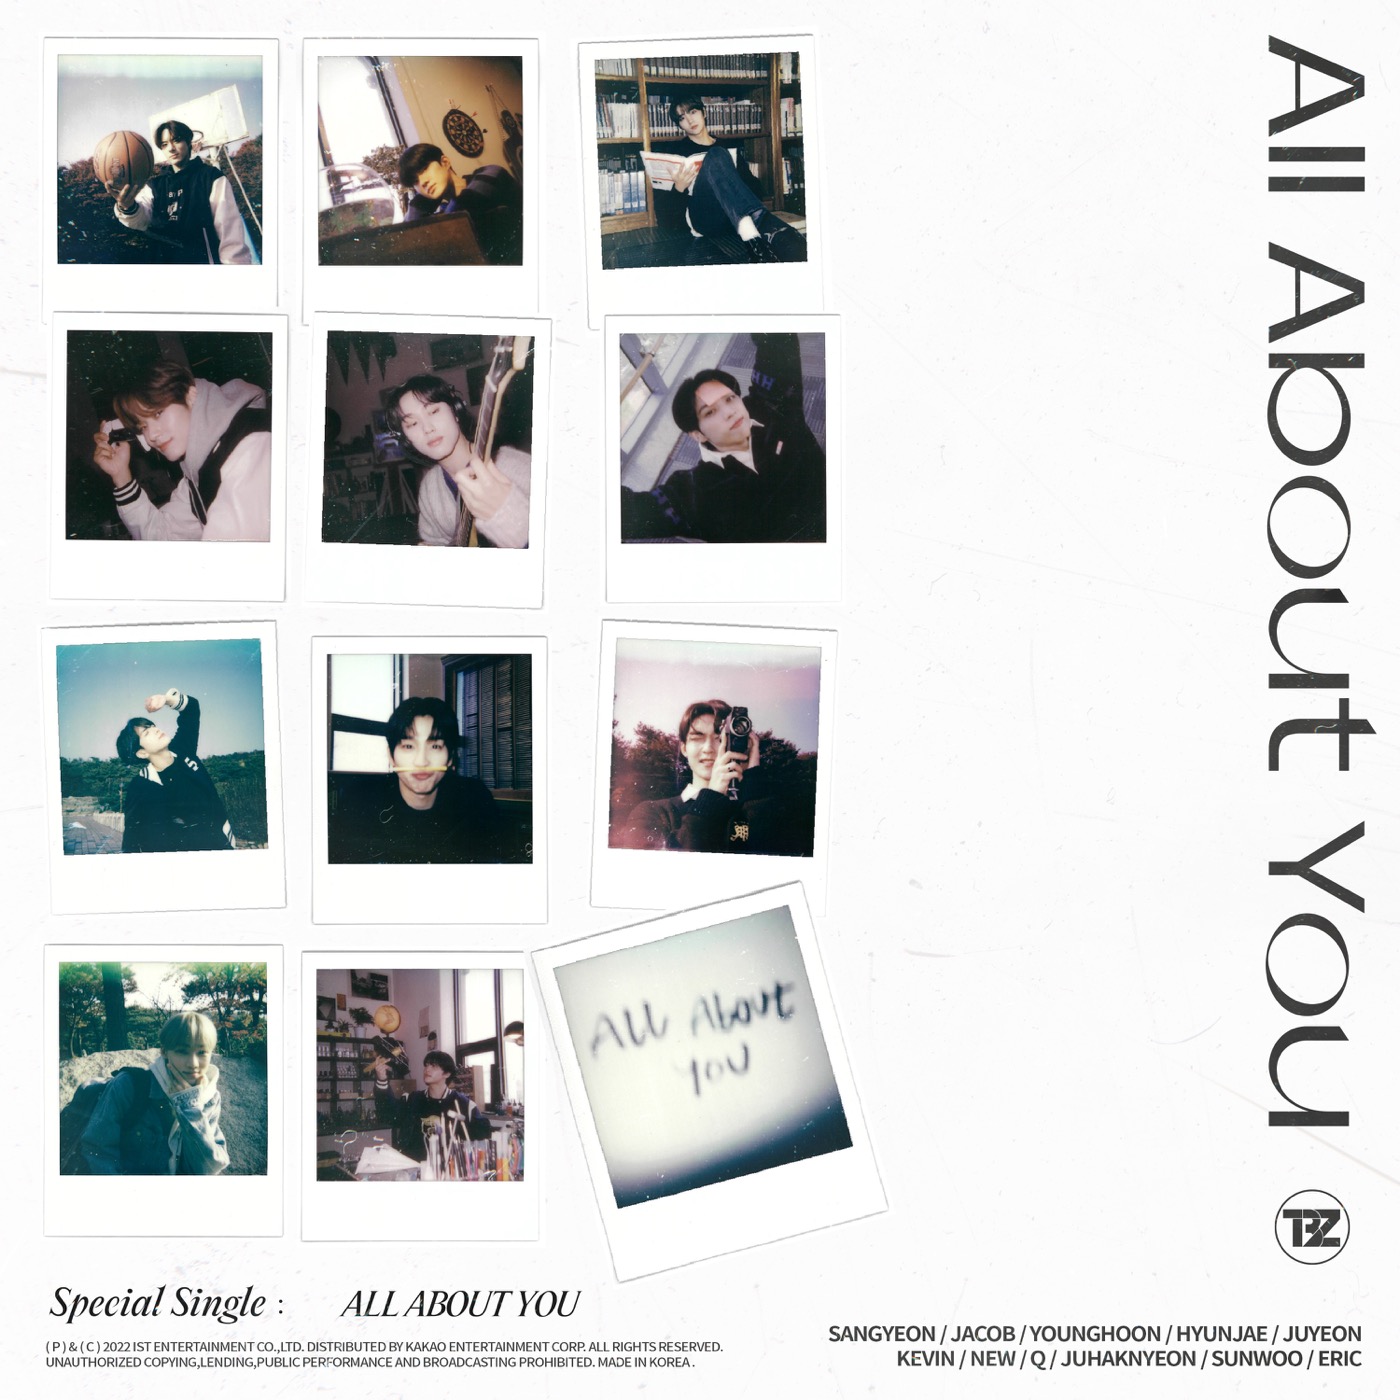 THE BOYZ、デビュー5周年記念シングル「All About You」を配信。MVも同時公開 - 画像一覧（1/2）